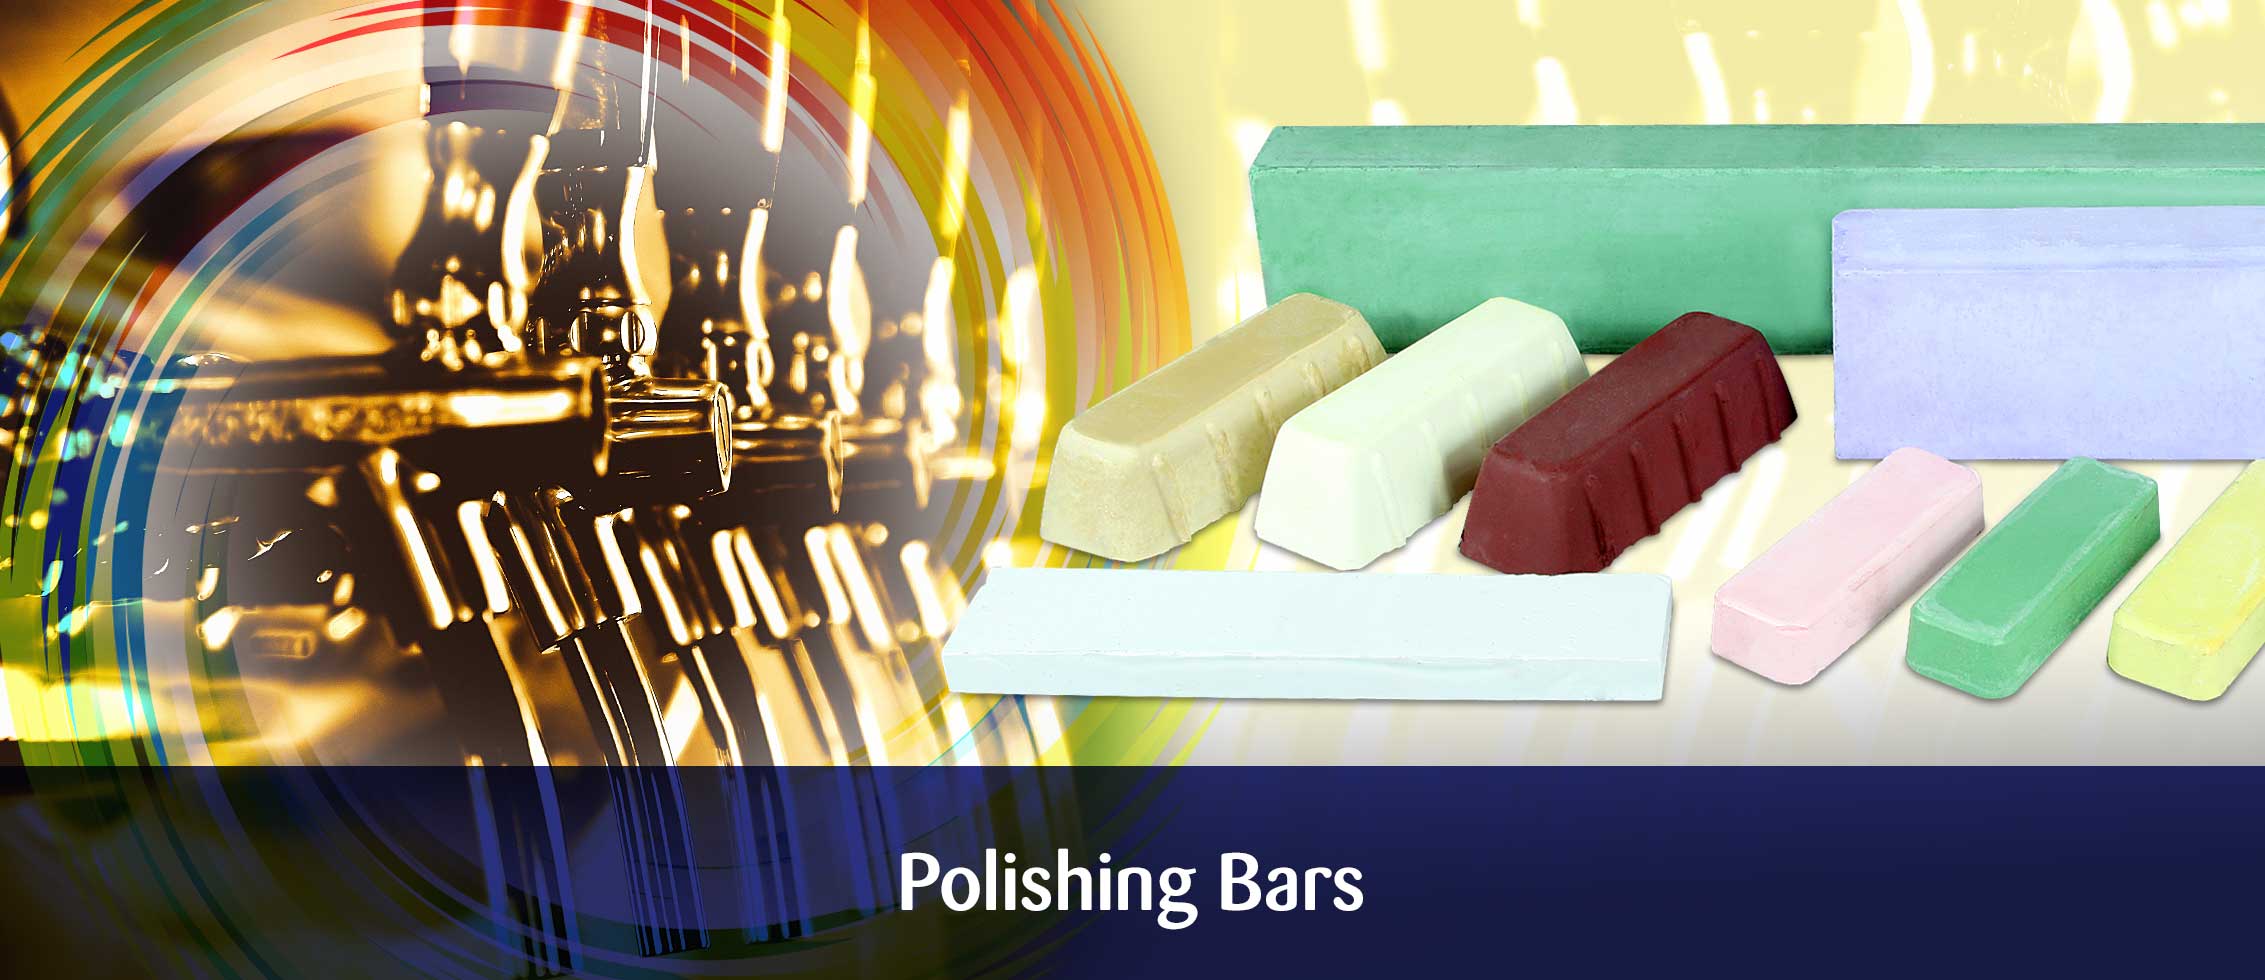 Polishing Bars